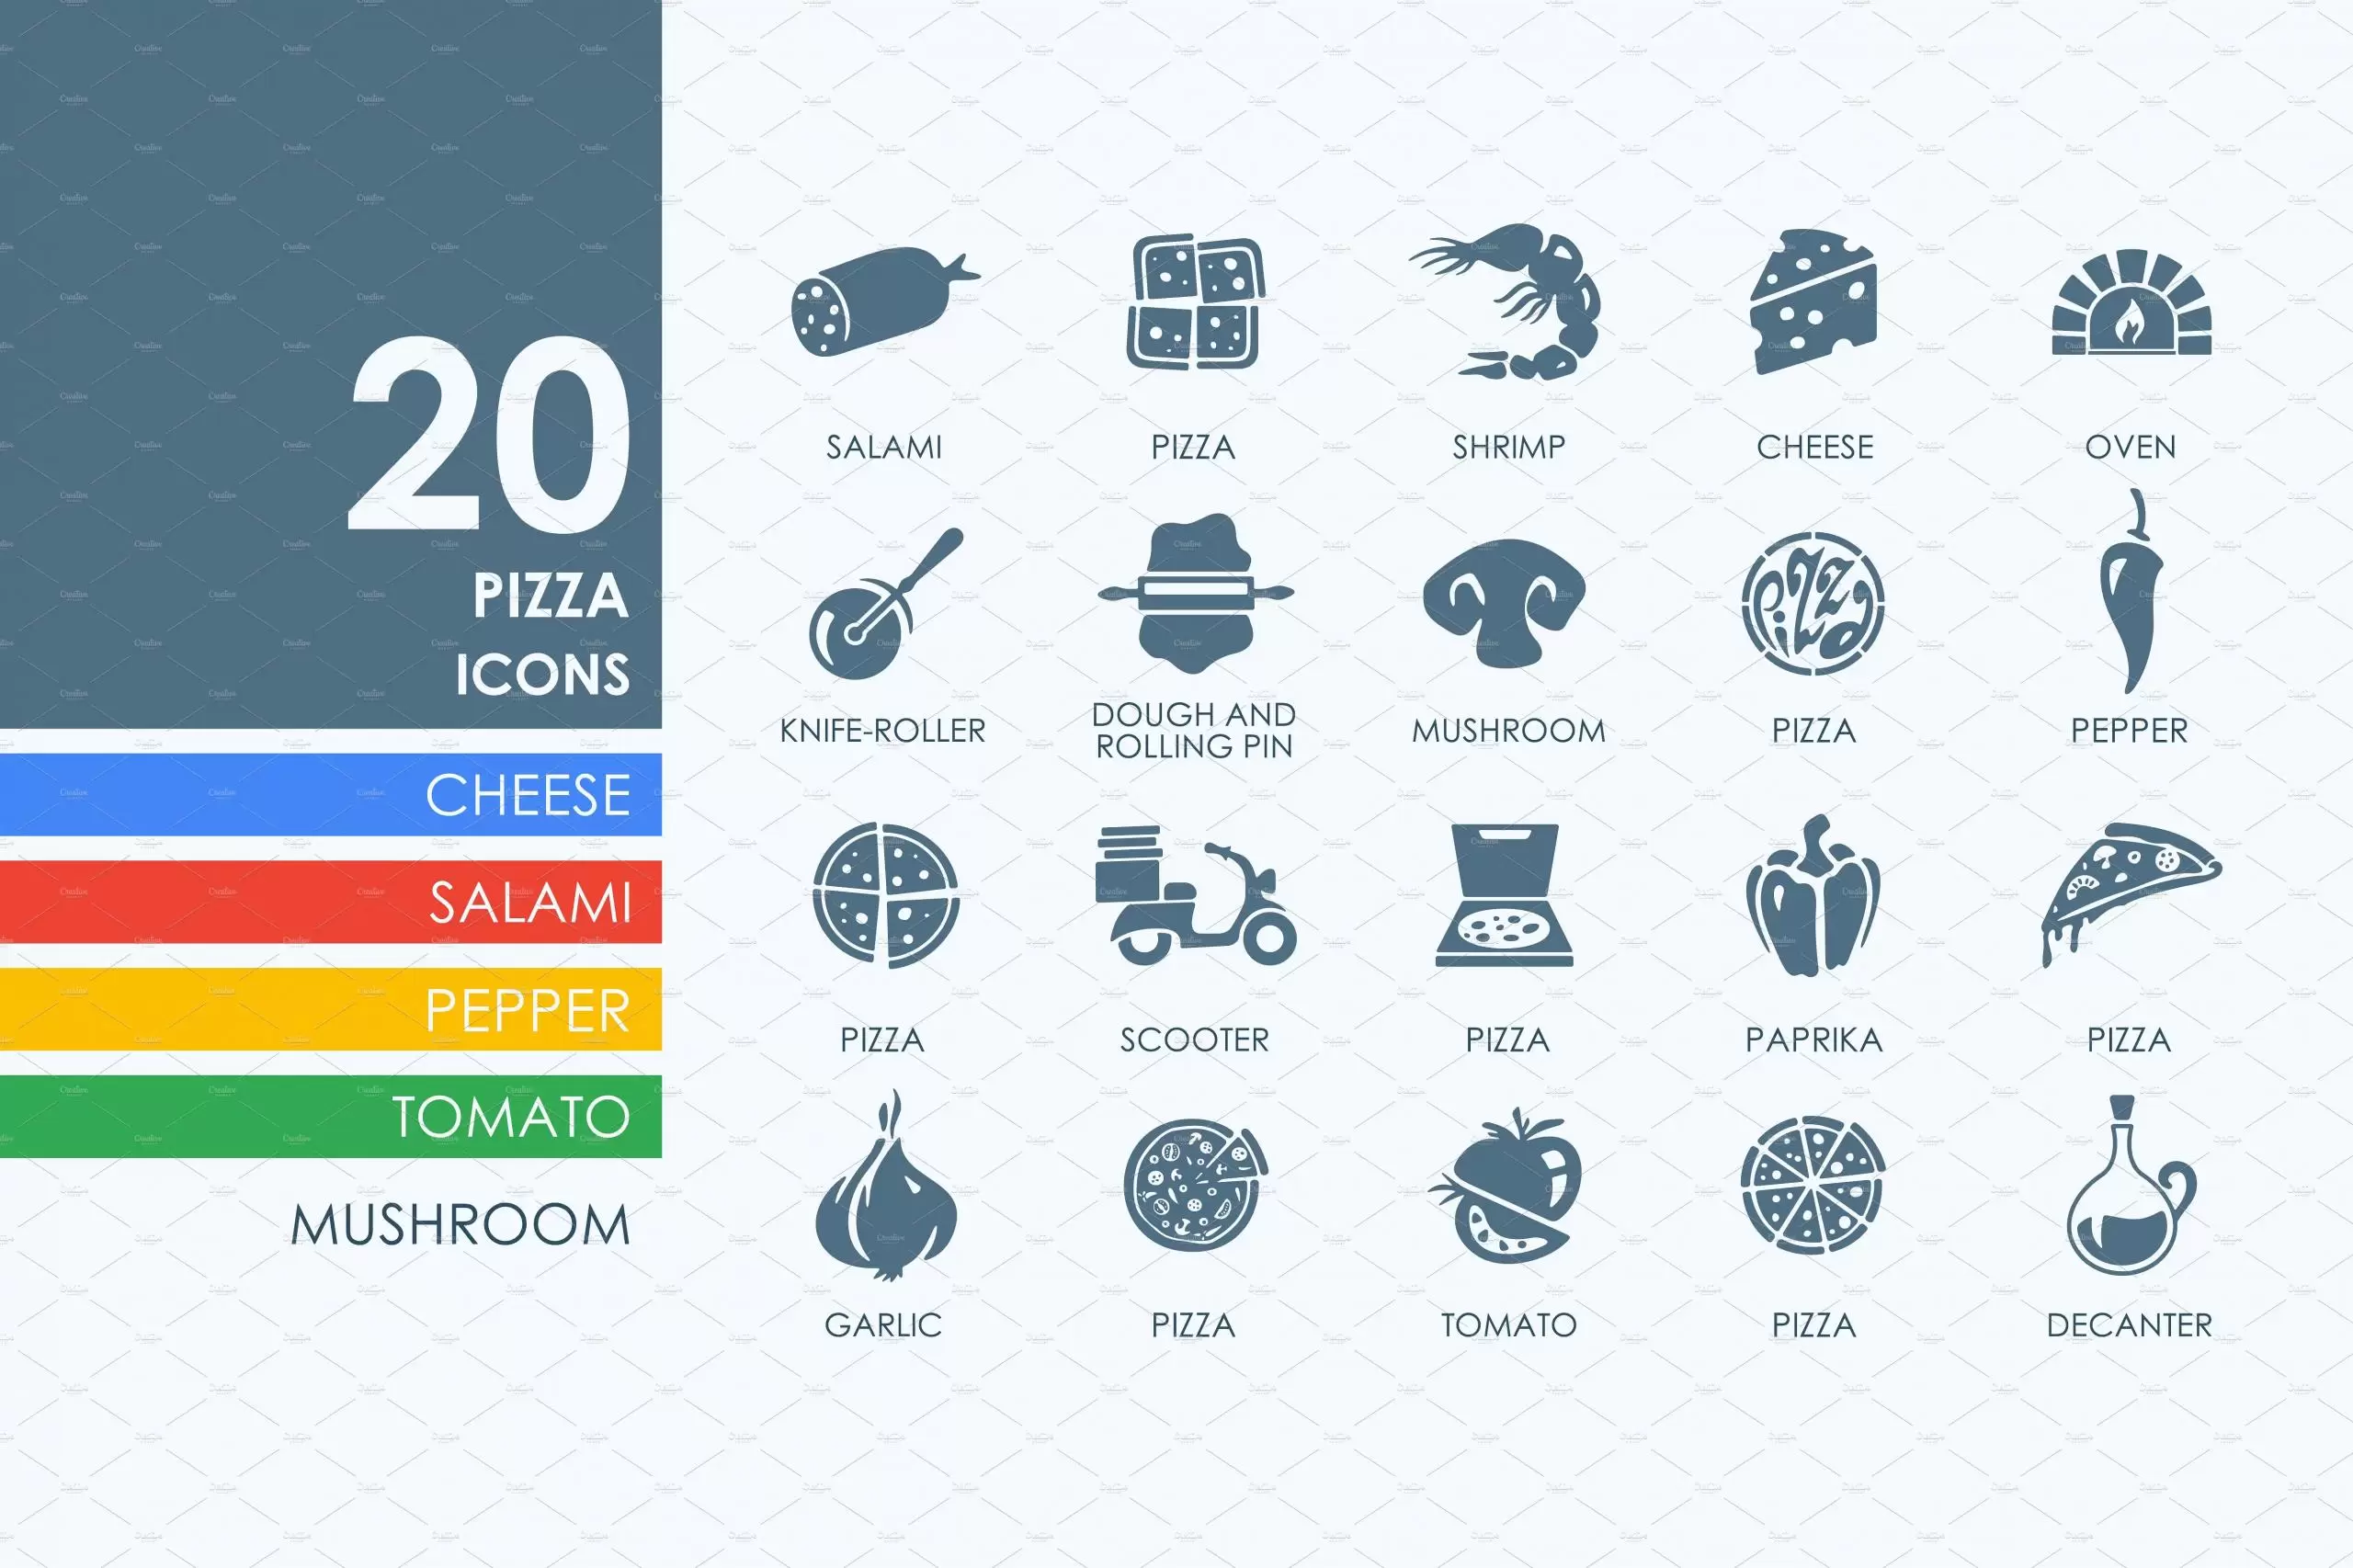 食品图标素材 20 pizza icons插图